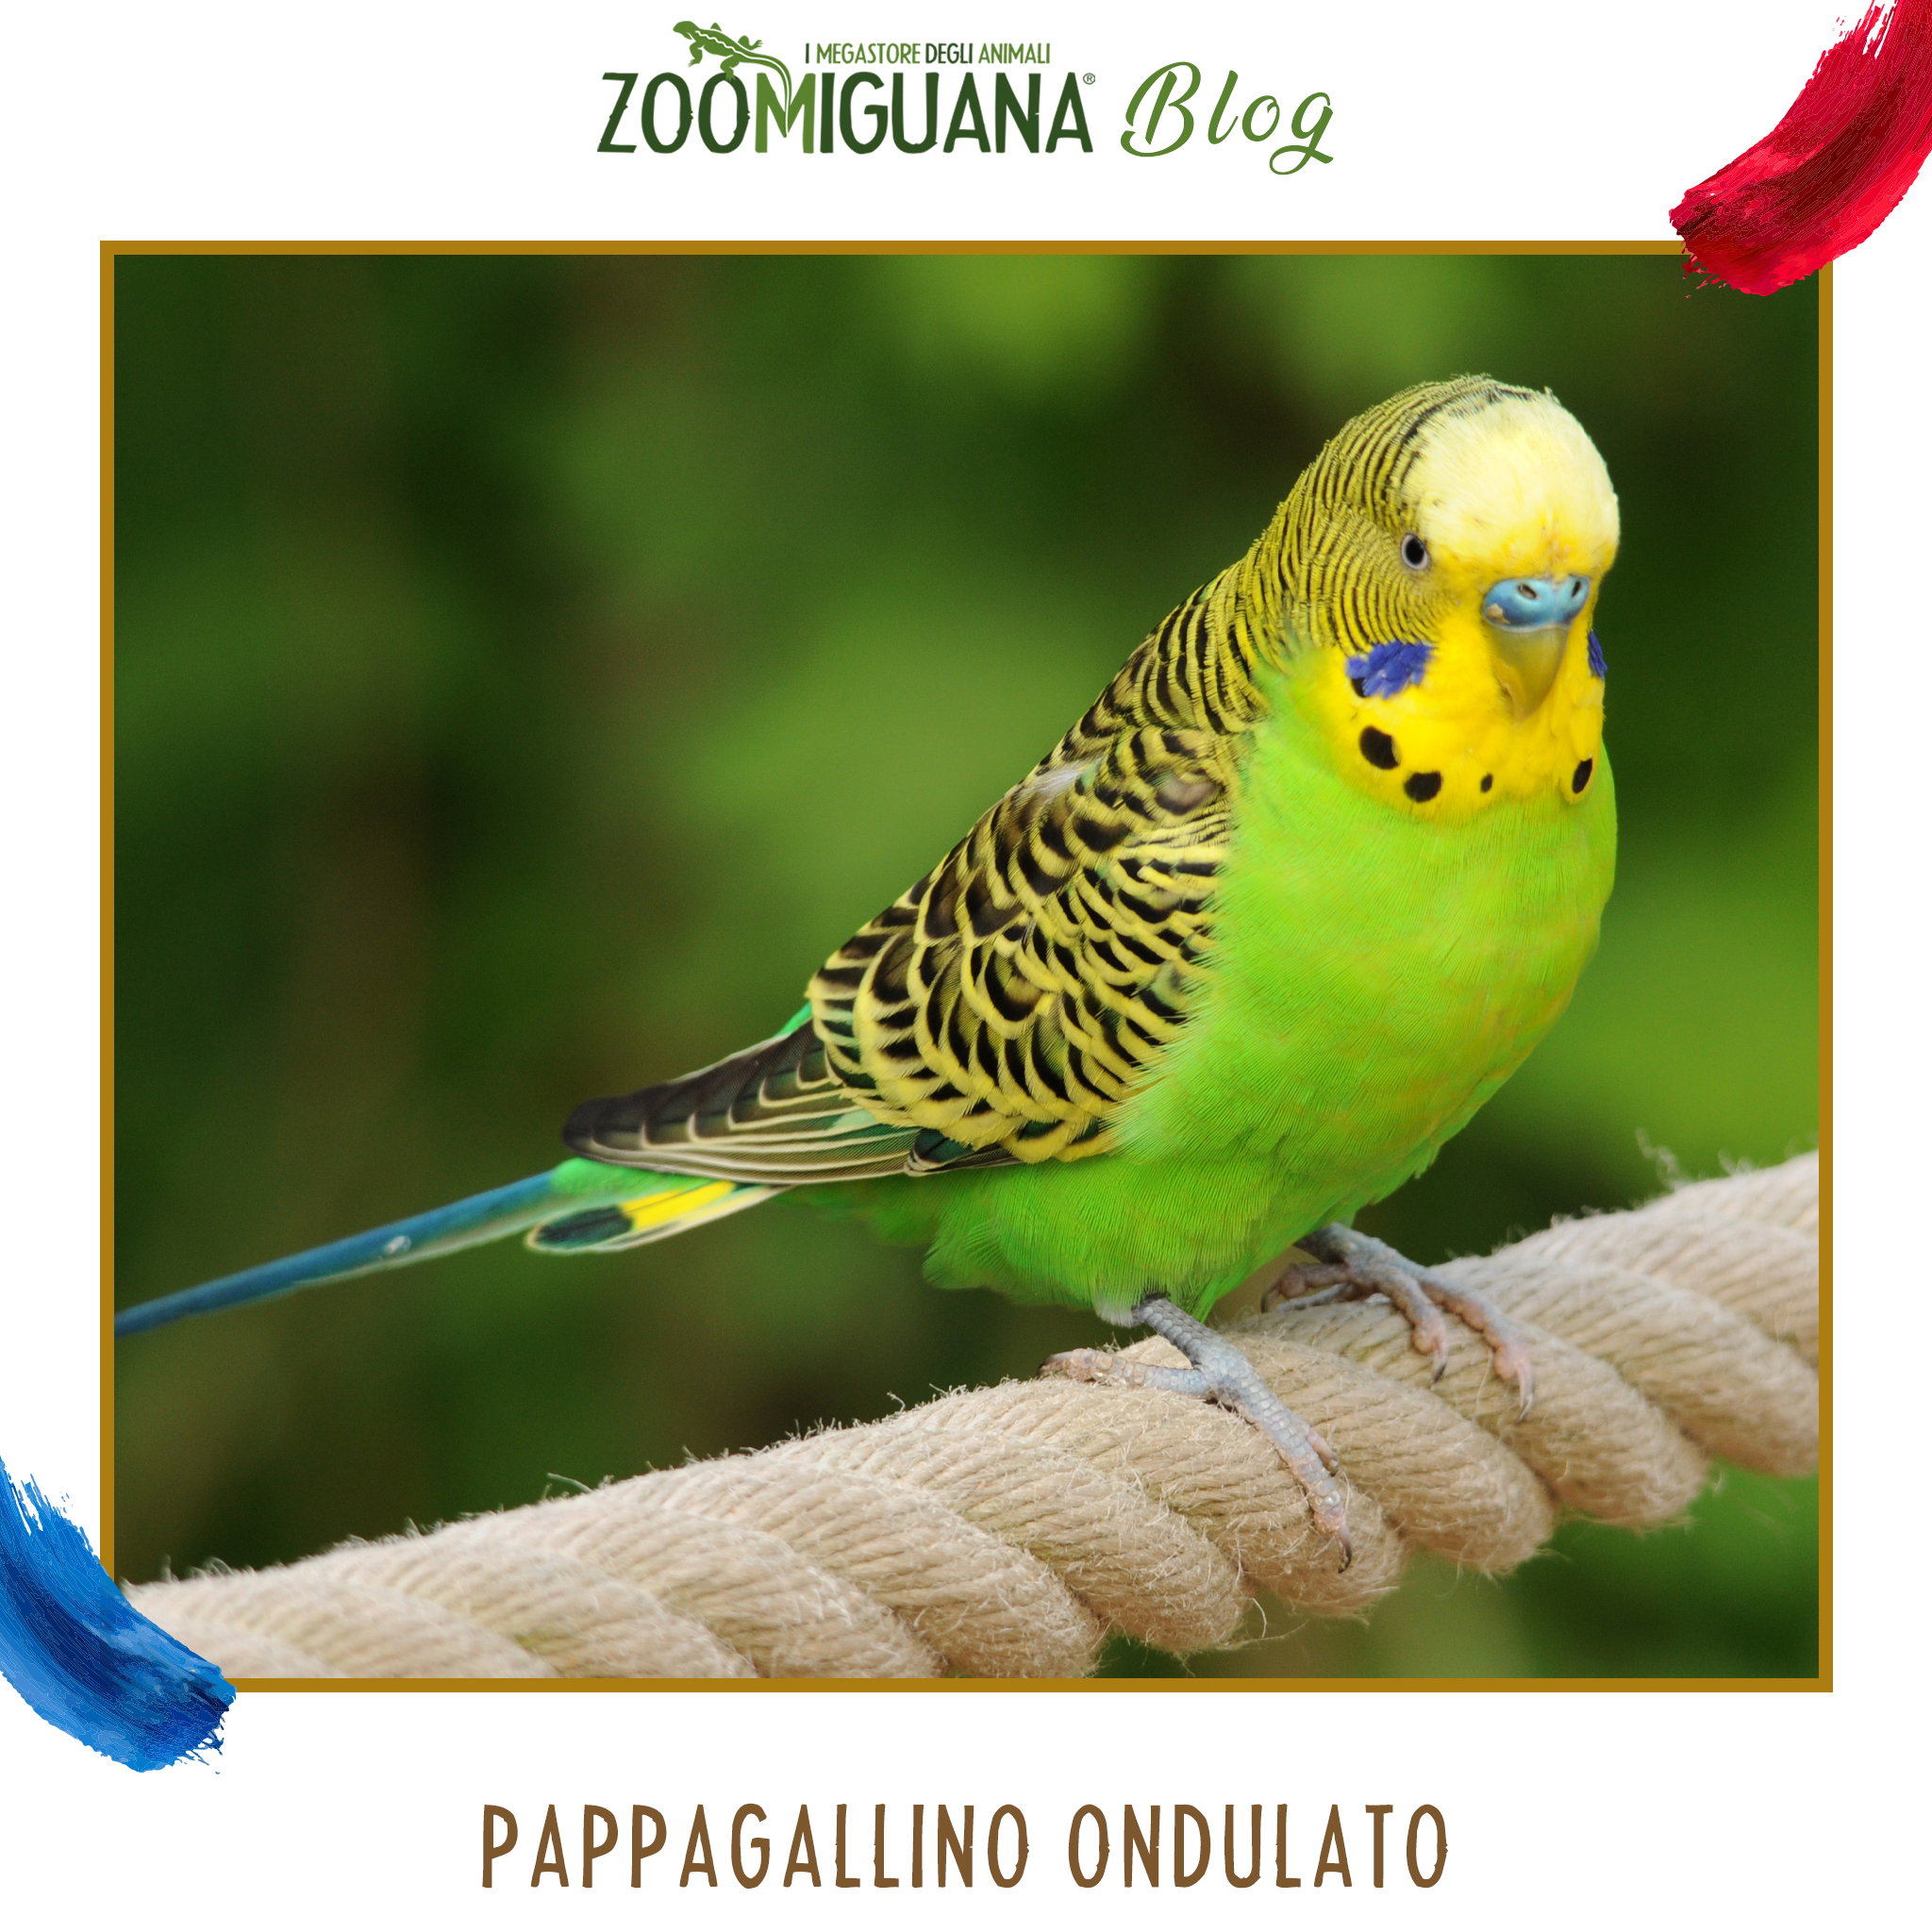 https://www.zoomiguana.com/wp-content/uploads/2021/02/Pappagallino-ondulato-zoomiguana.jpg